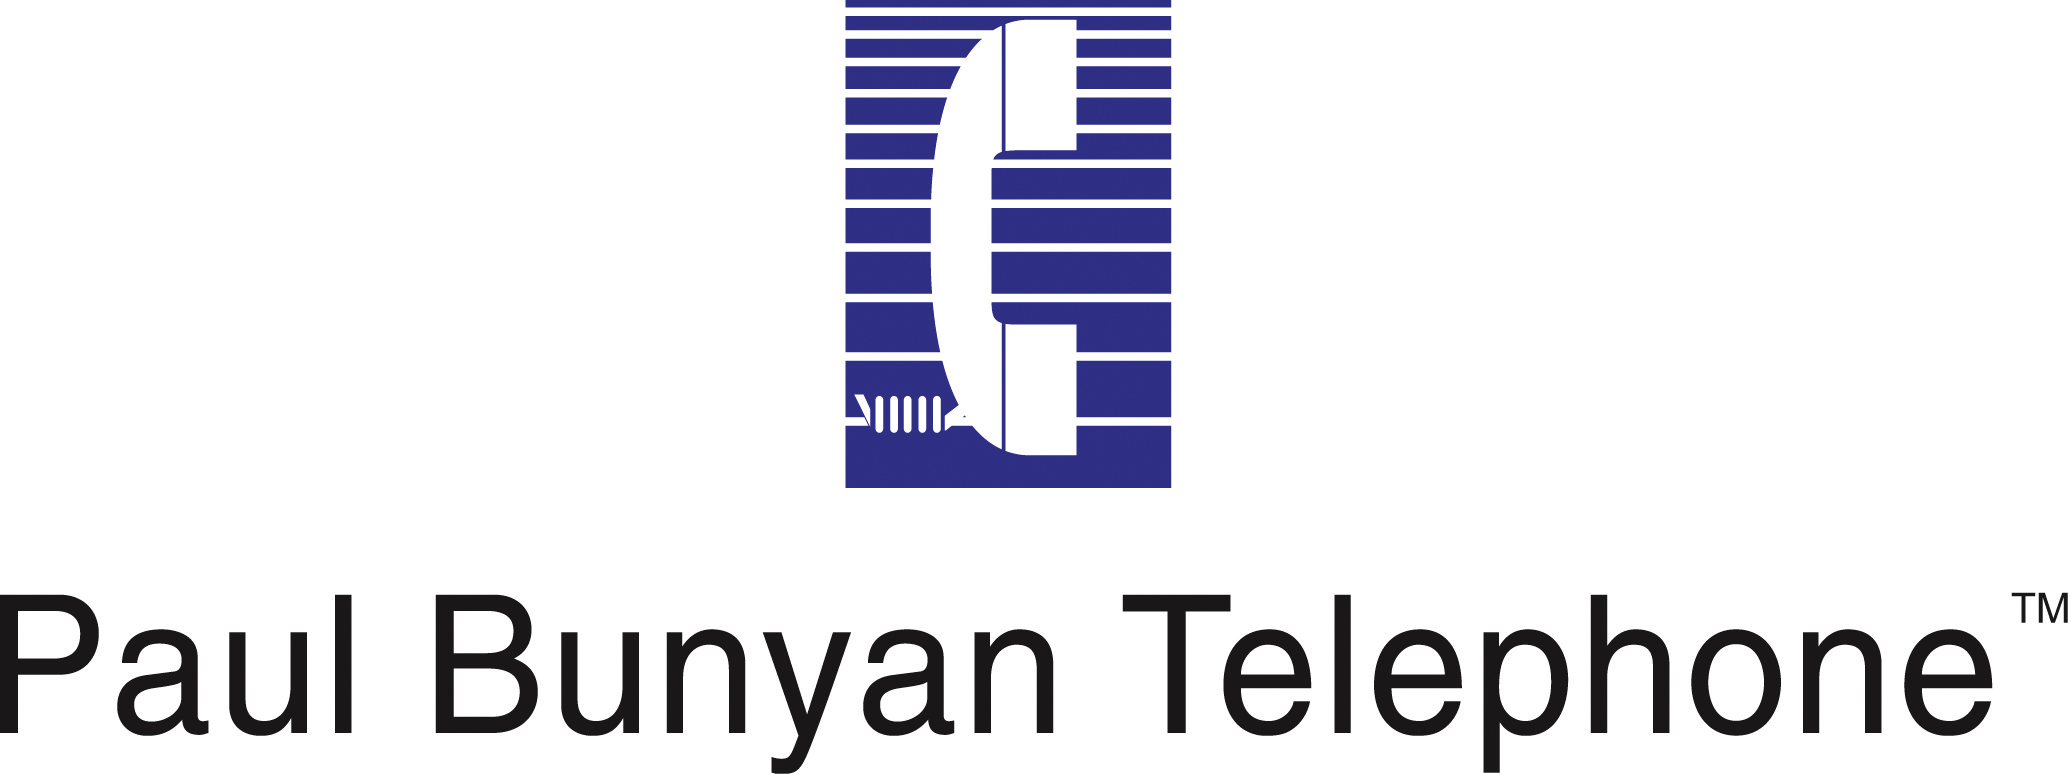 Bunyan Telephone logo